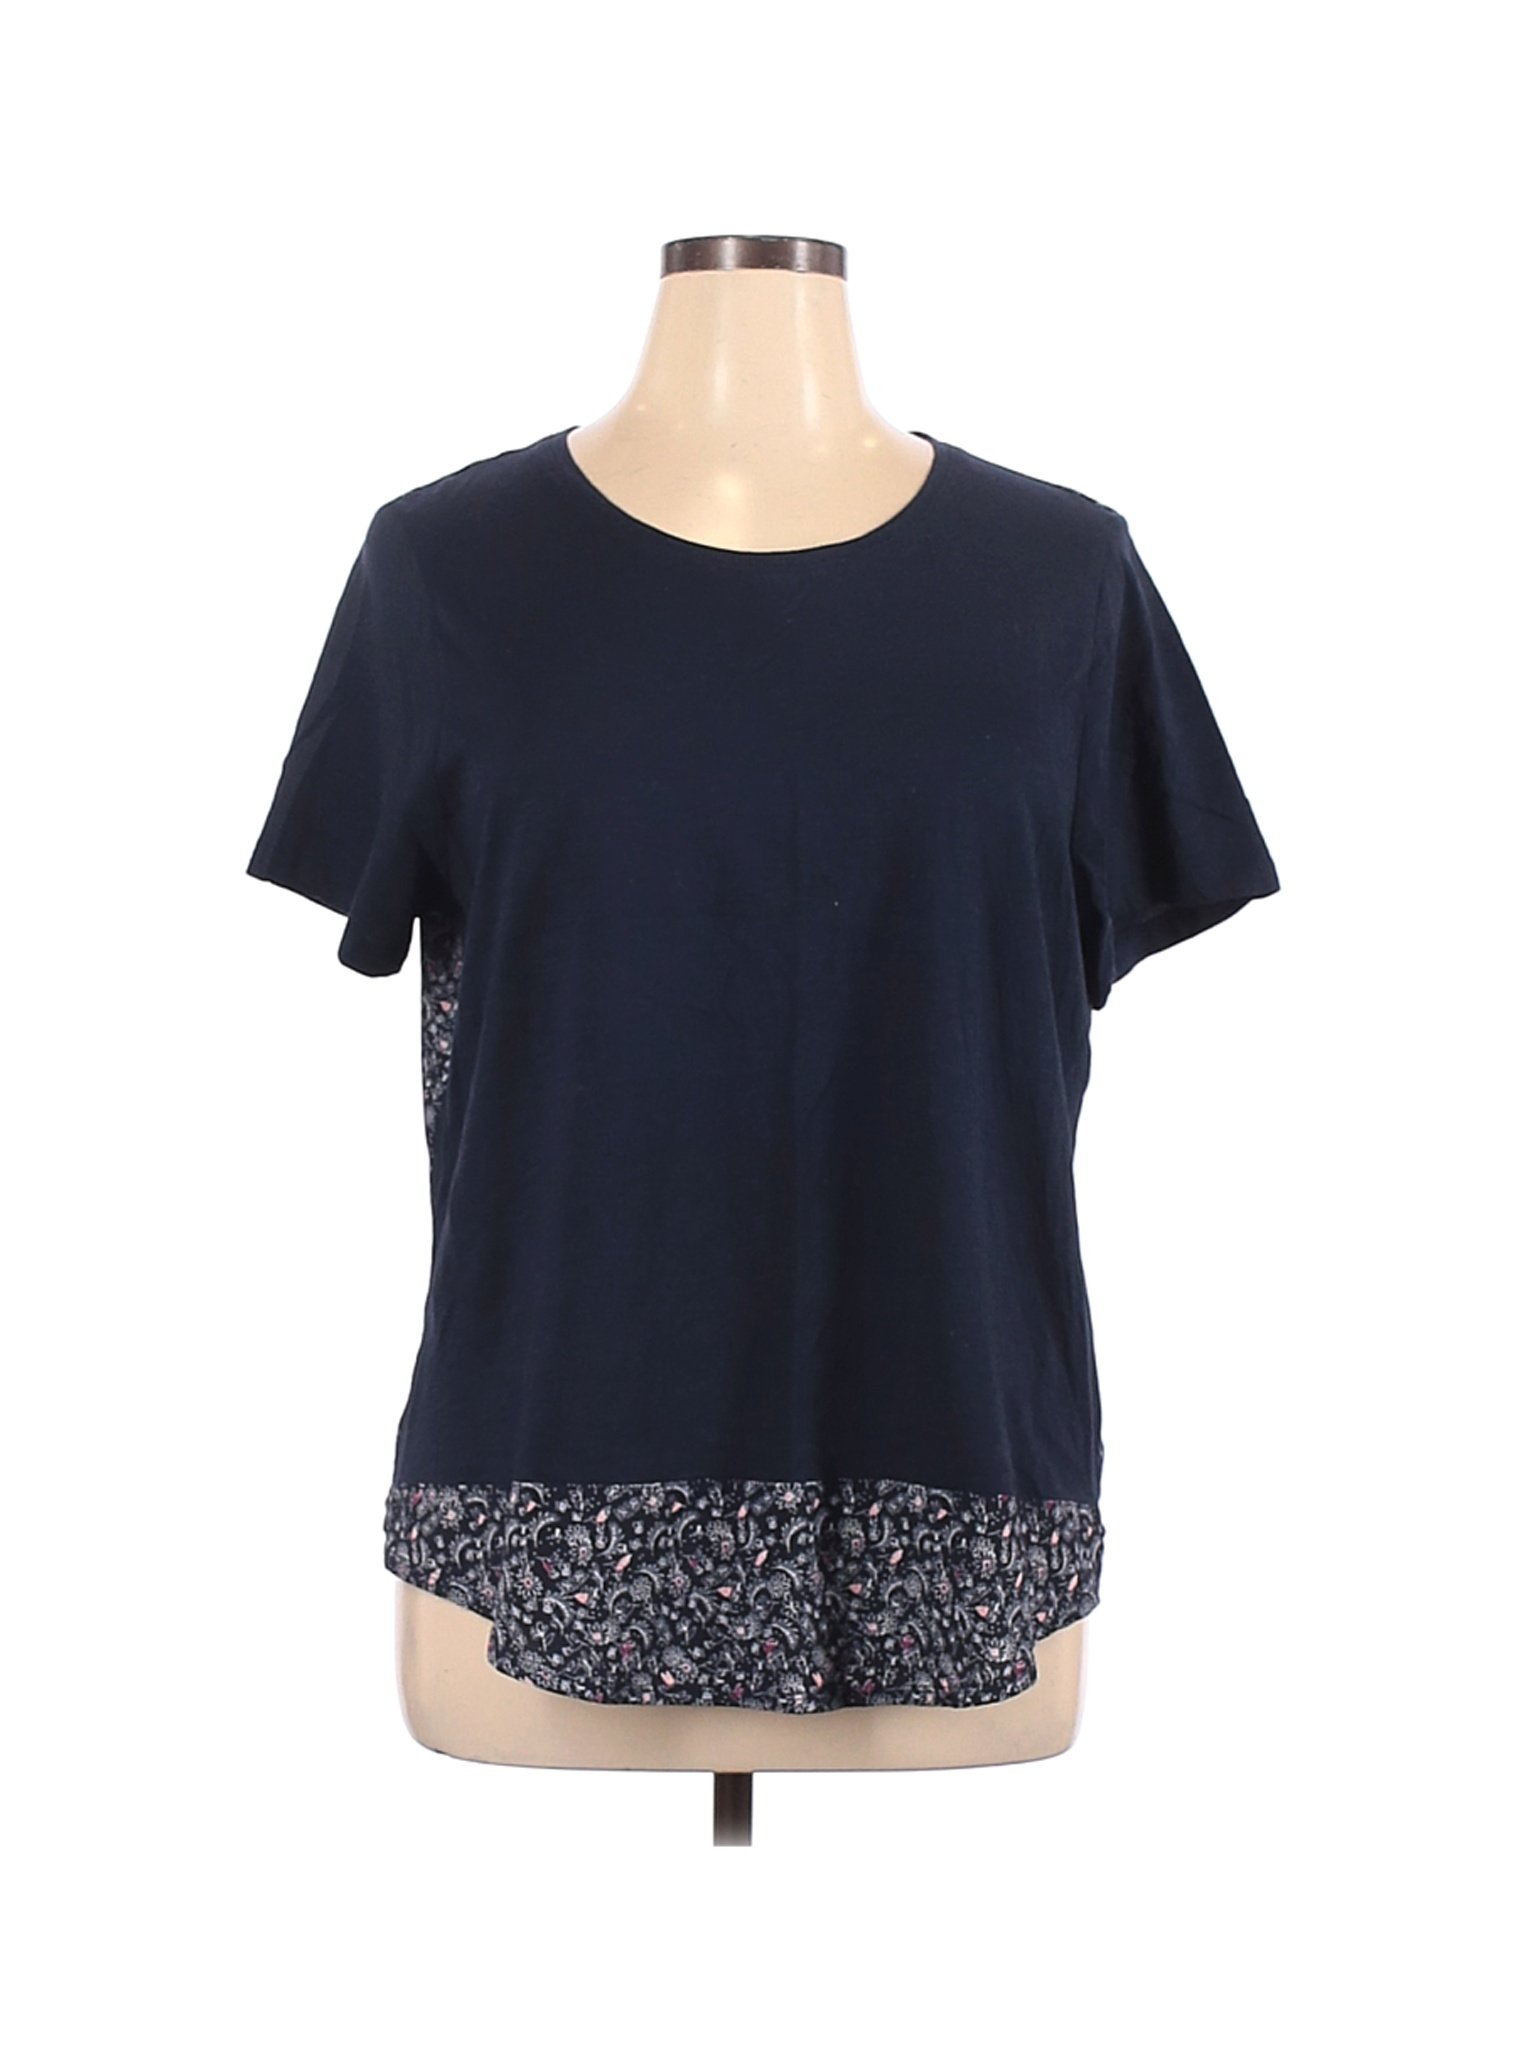 Christopher & Banks Women Blue Short Sleeve Top XL | eBay